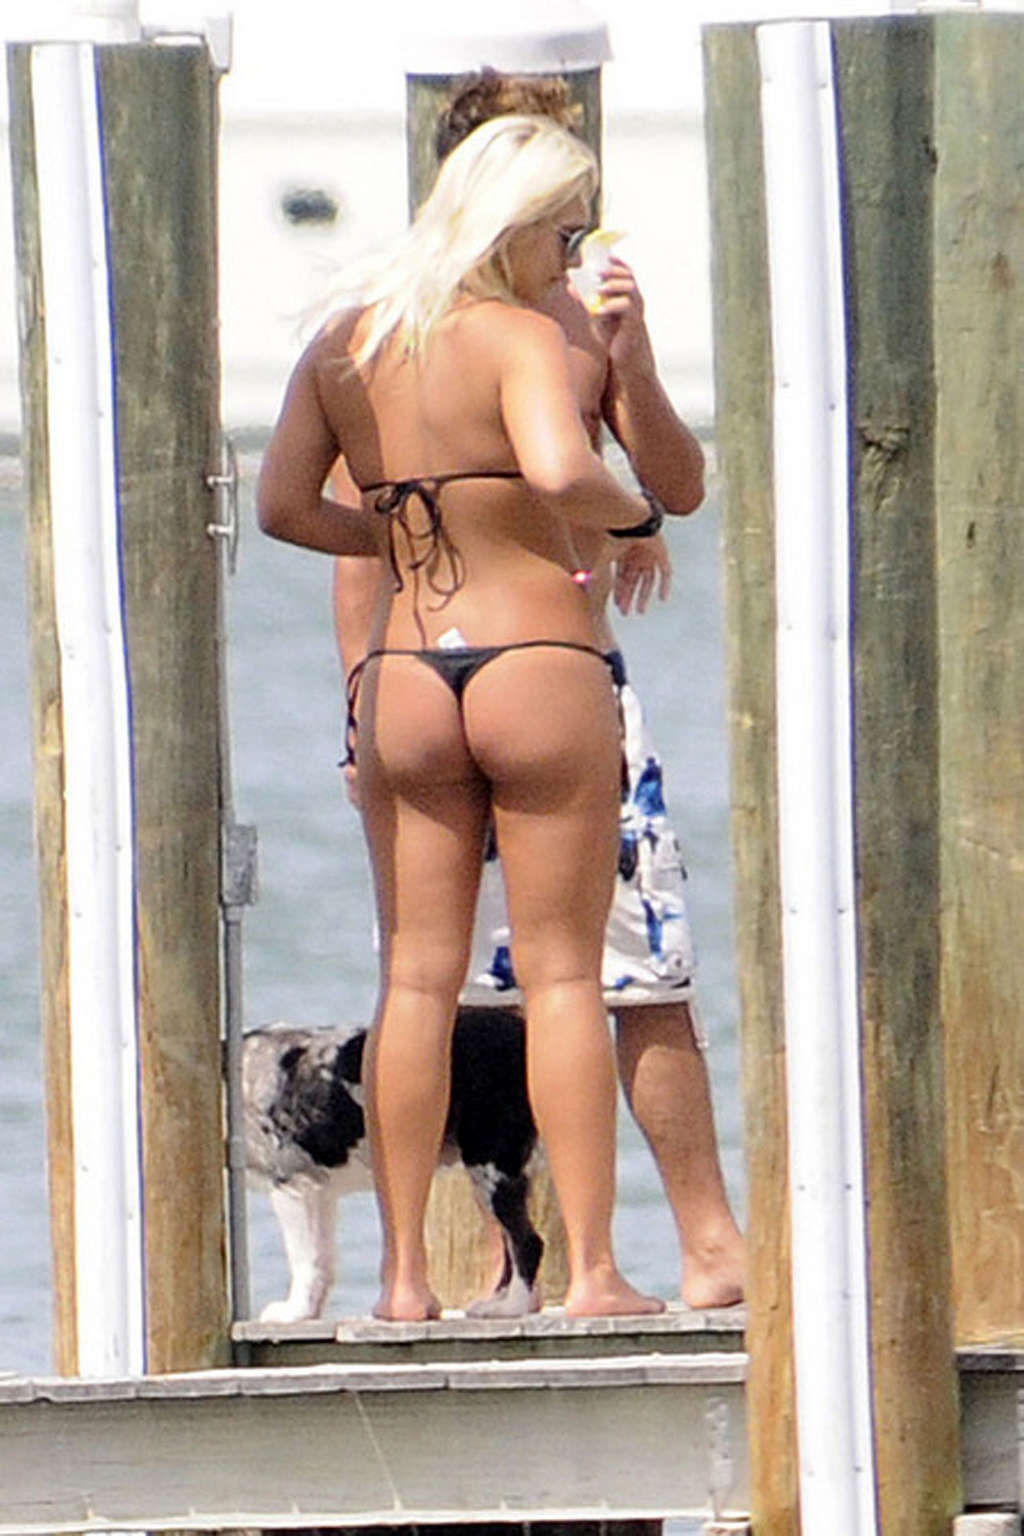 Brooke Hogan walking with most her ass on display in a thong bikini.